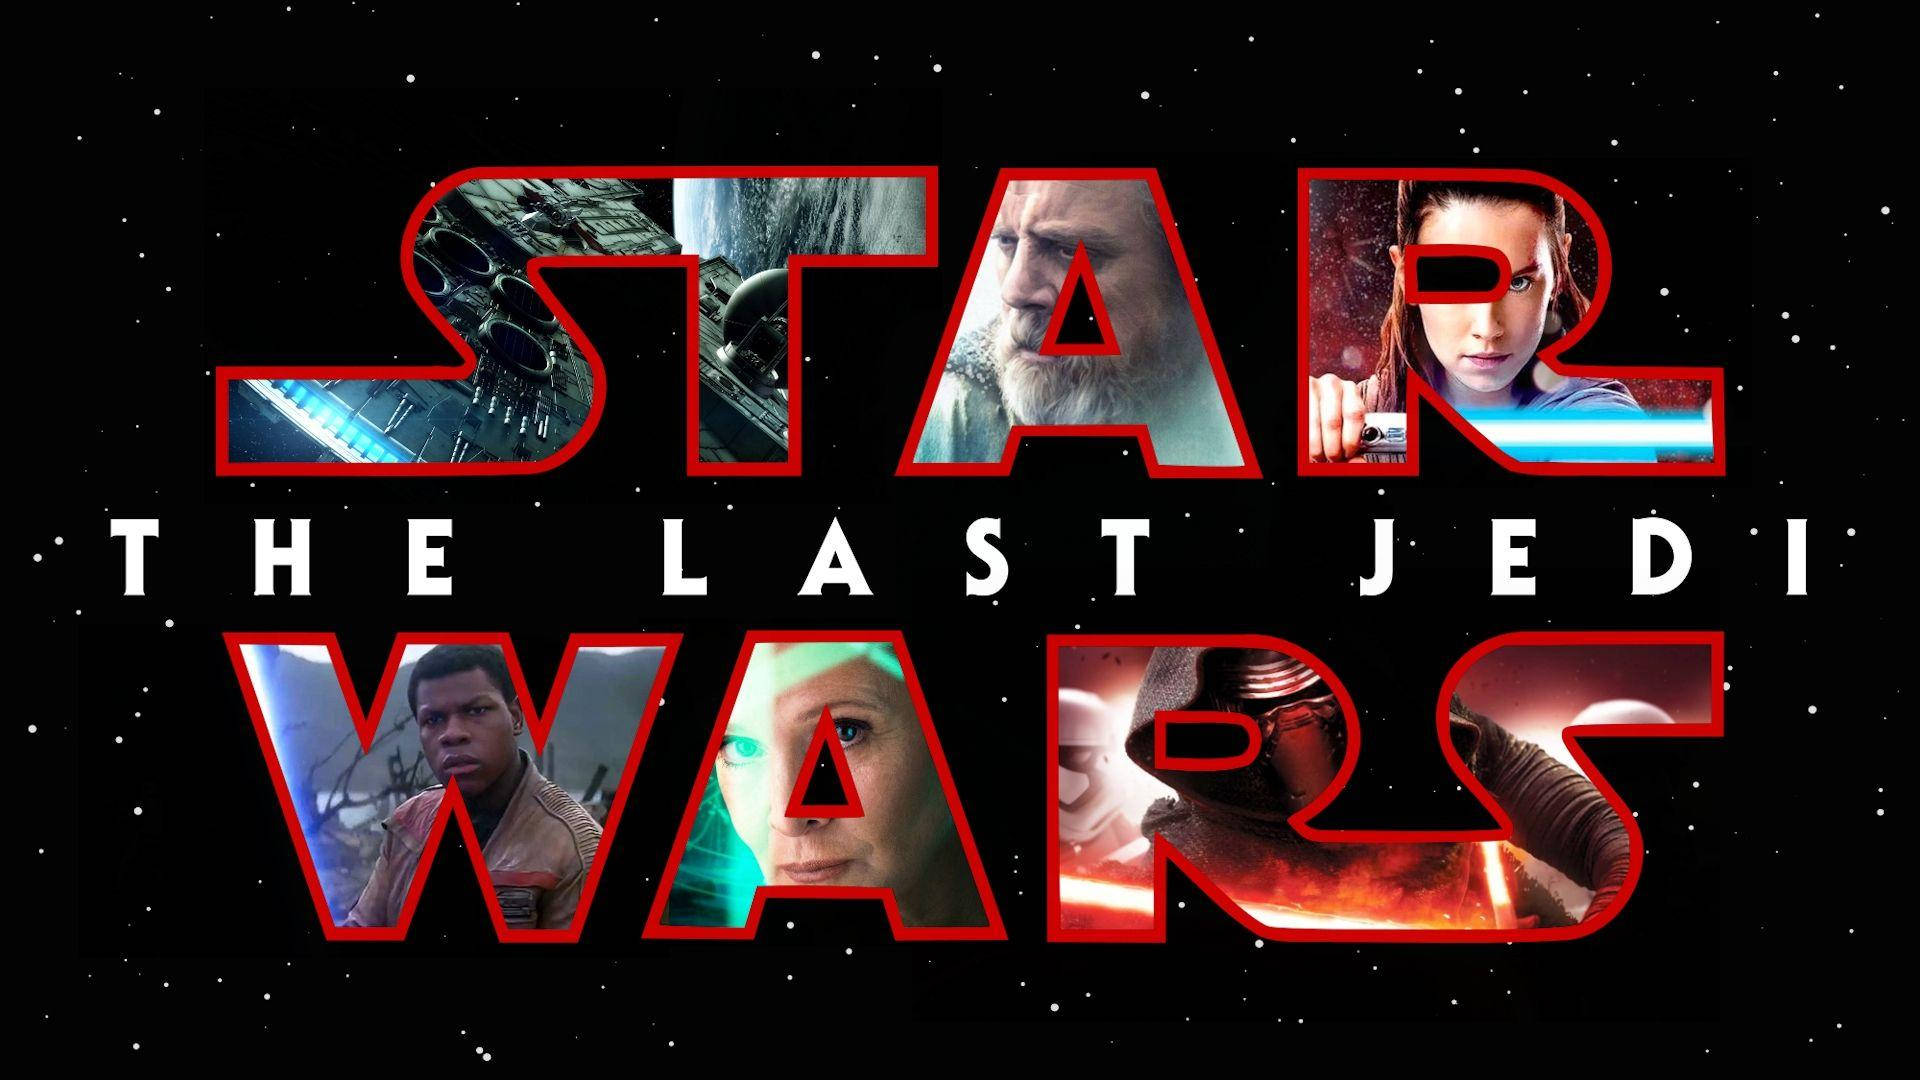 The Last Jedi Star Wars Movie Poster Wallpaper